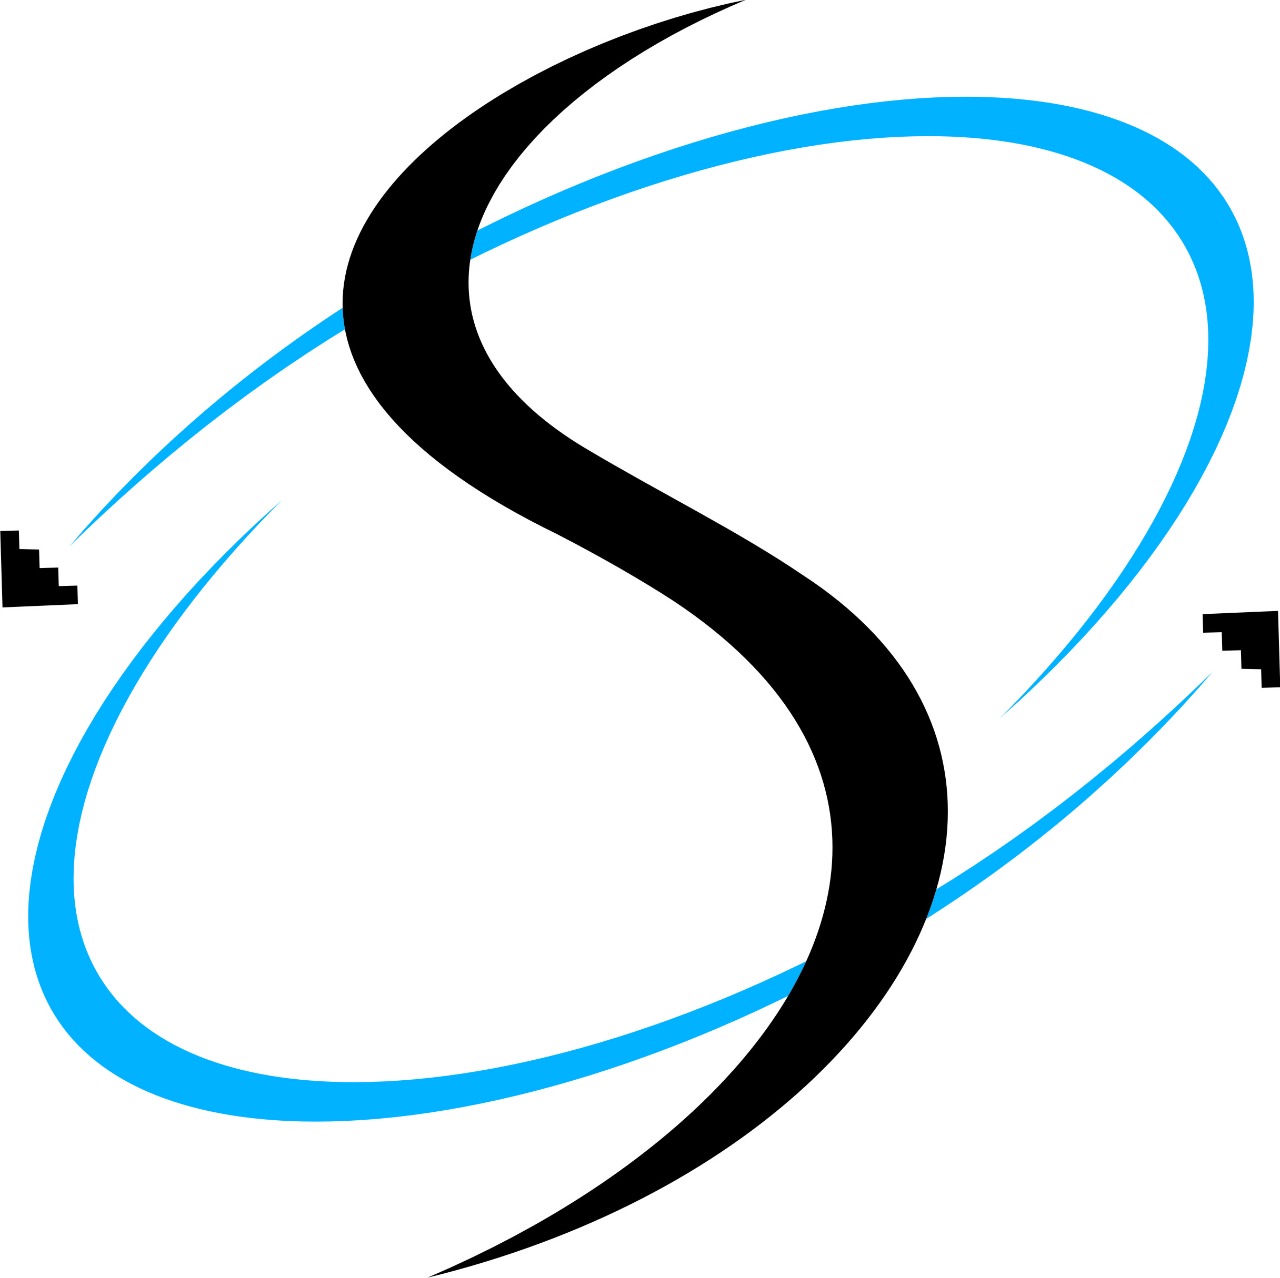 solution logo